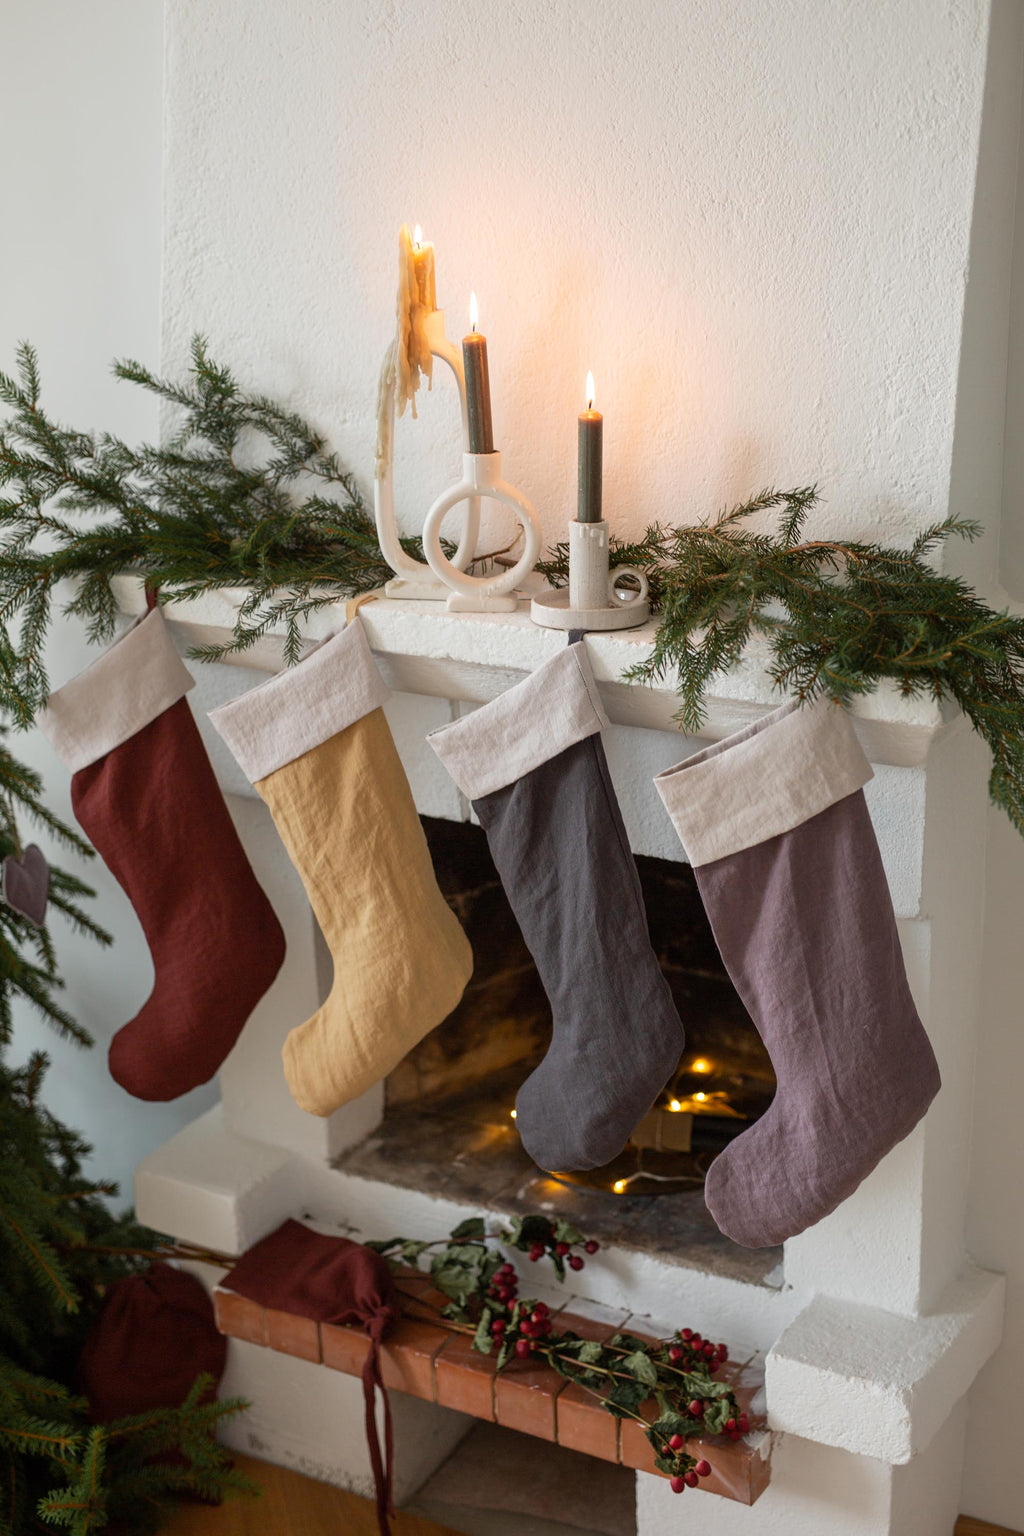 Christmas Stocking Polyester Linen